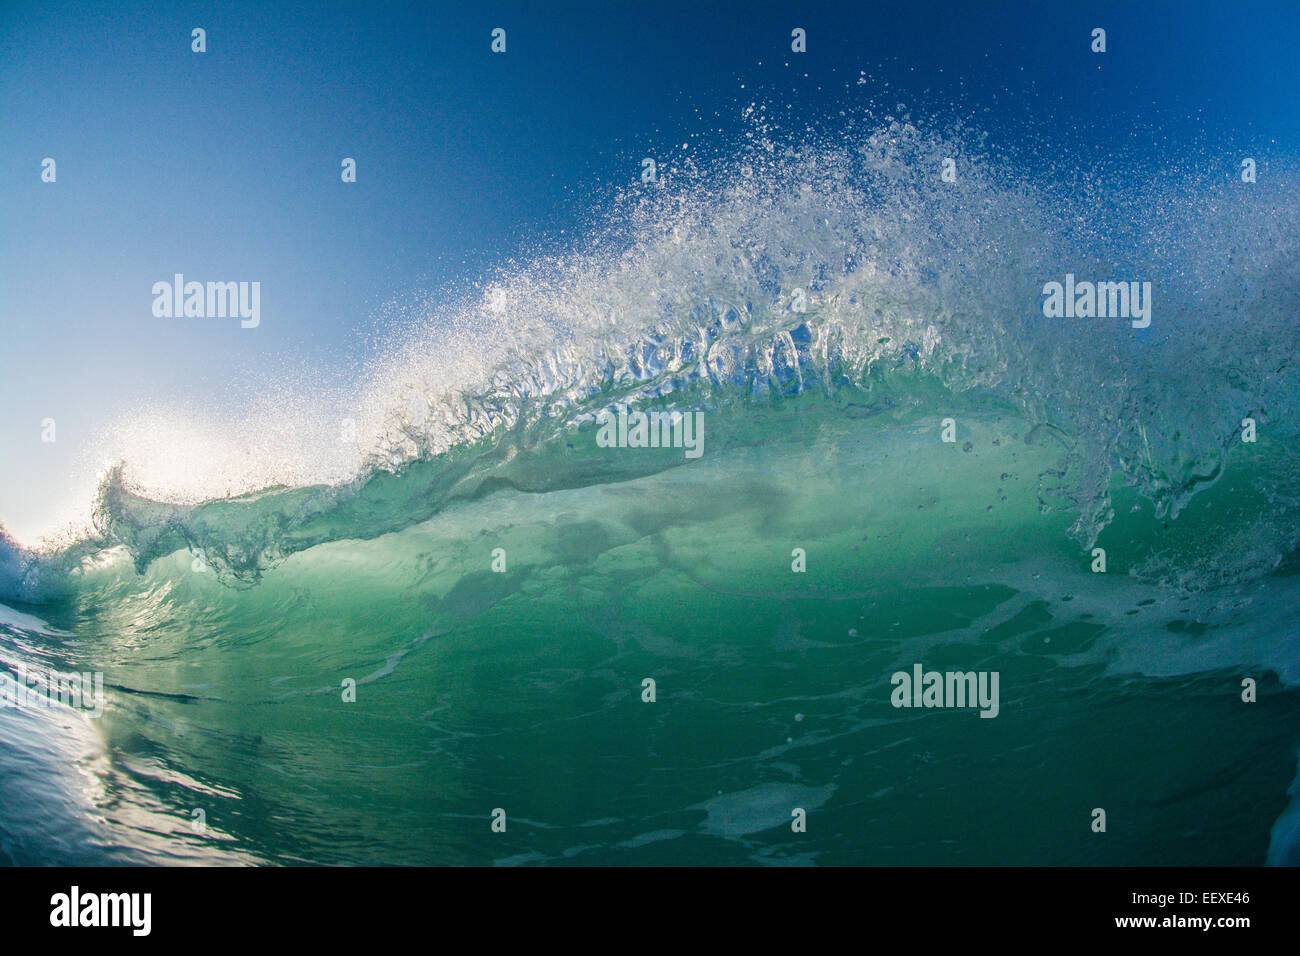 Shorebreak wave, Distilideros, Baja California Sur, Mexico Stock Photo